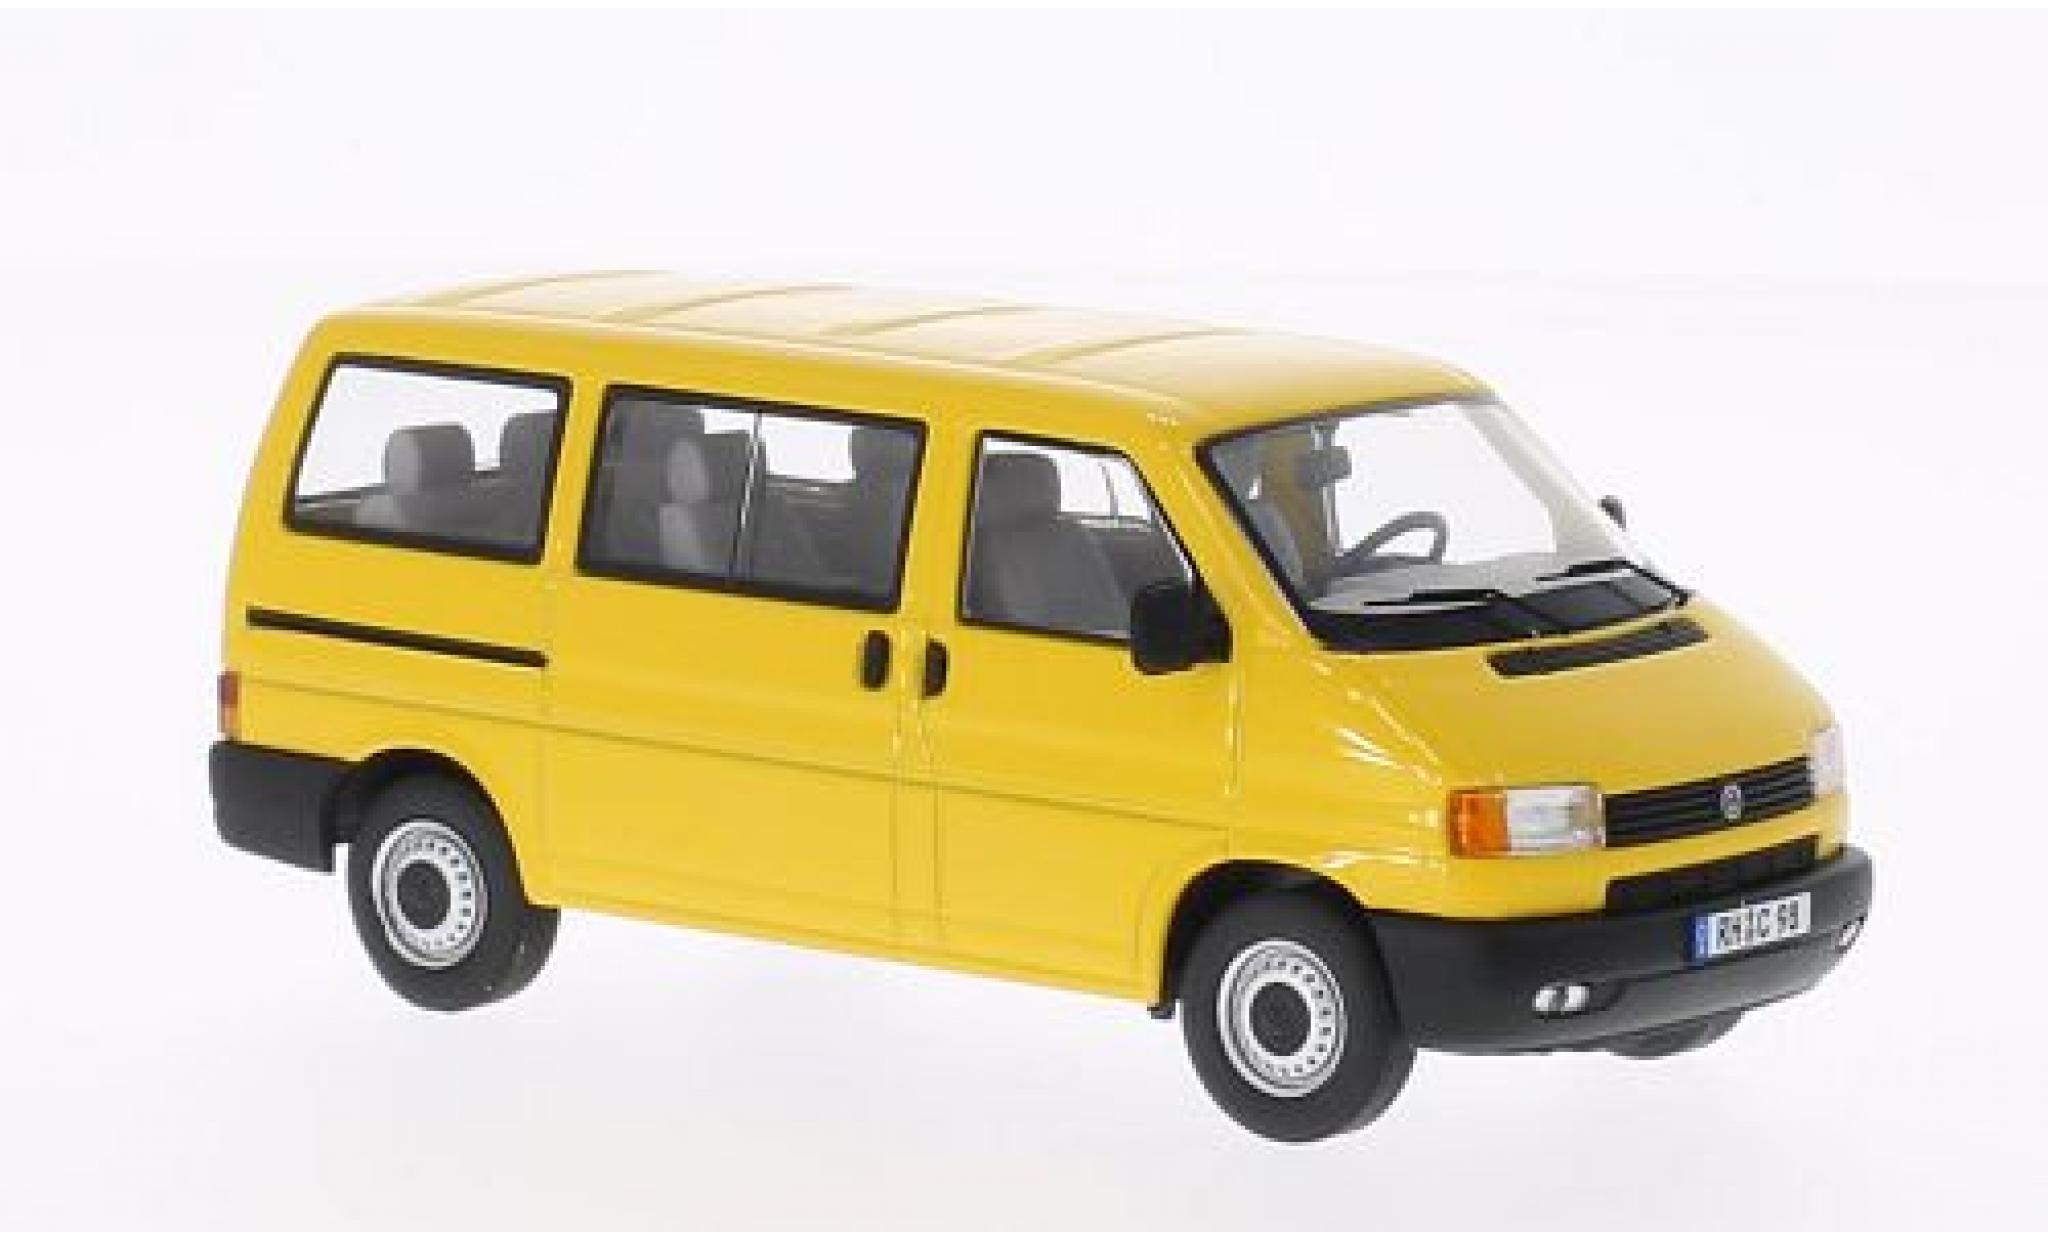 Volkswagen T4 1/43 Premium ClassiXXs jaune bus